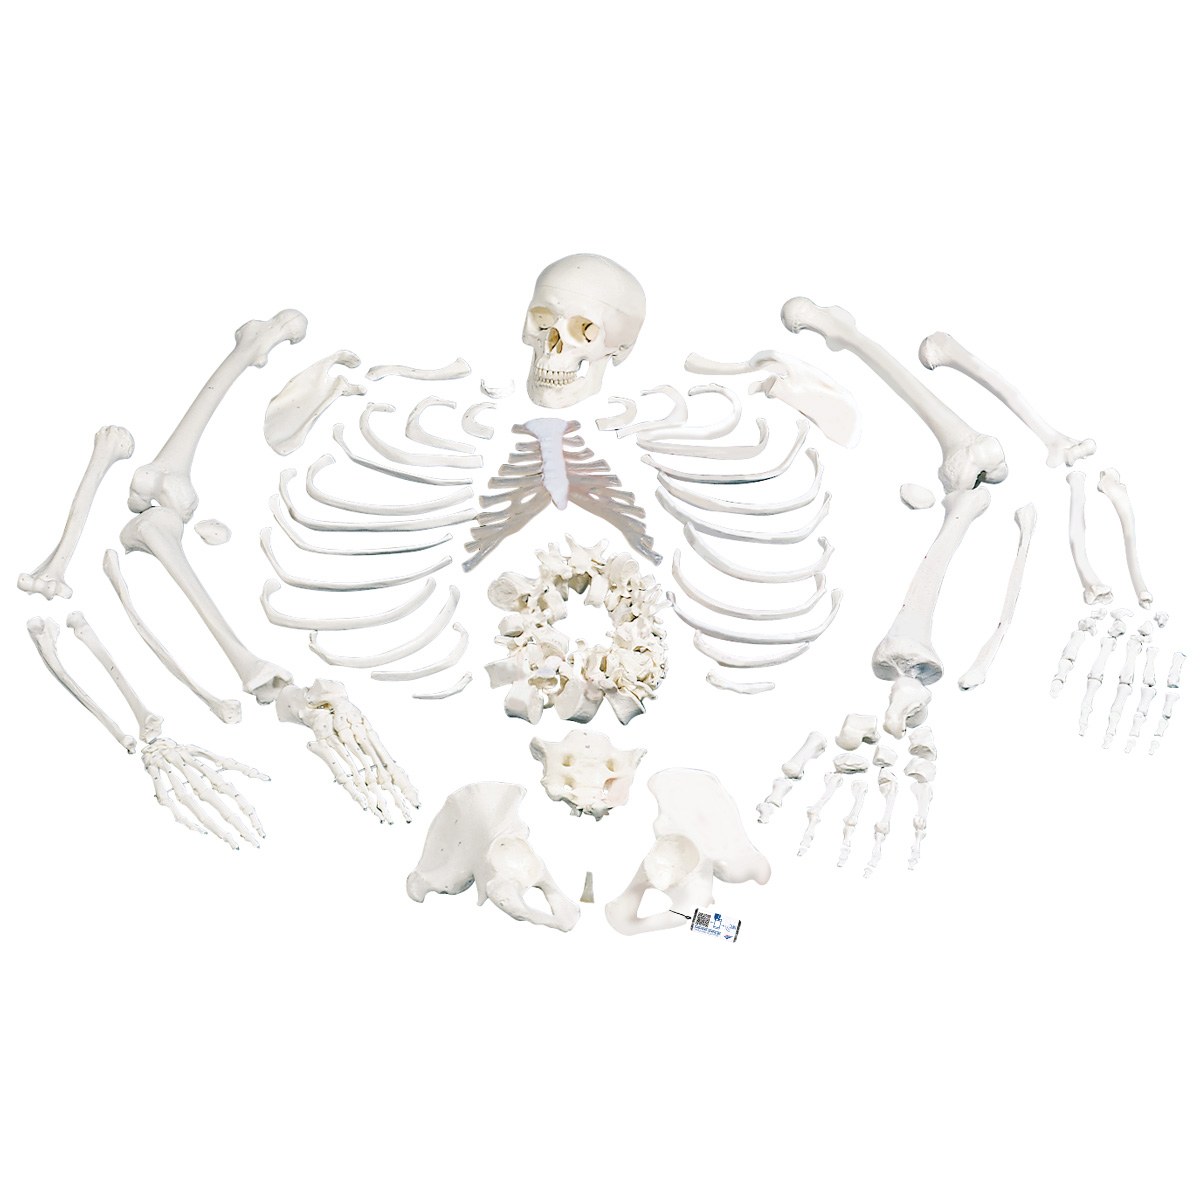 3B Scientific Adult Human Skeleton - includes 3B Smart Anatomy:Education